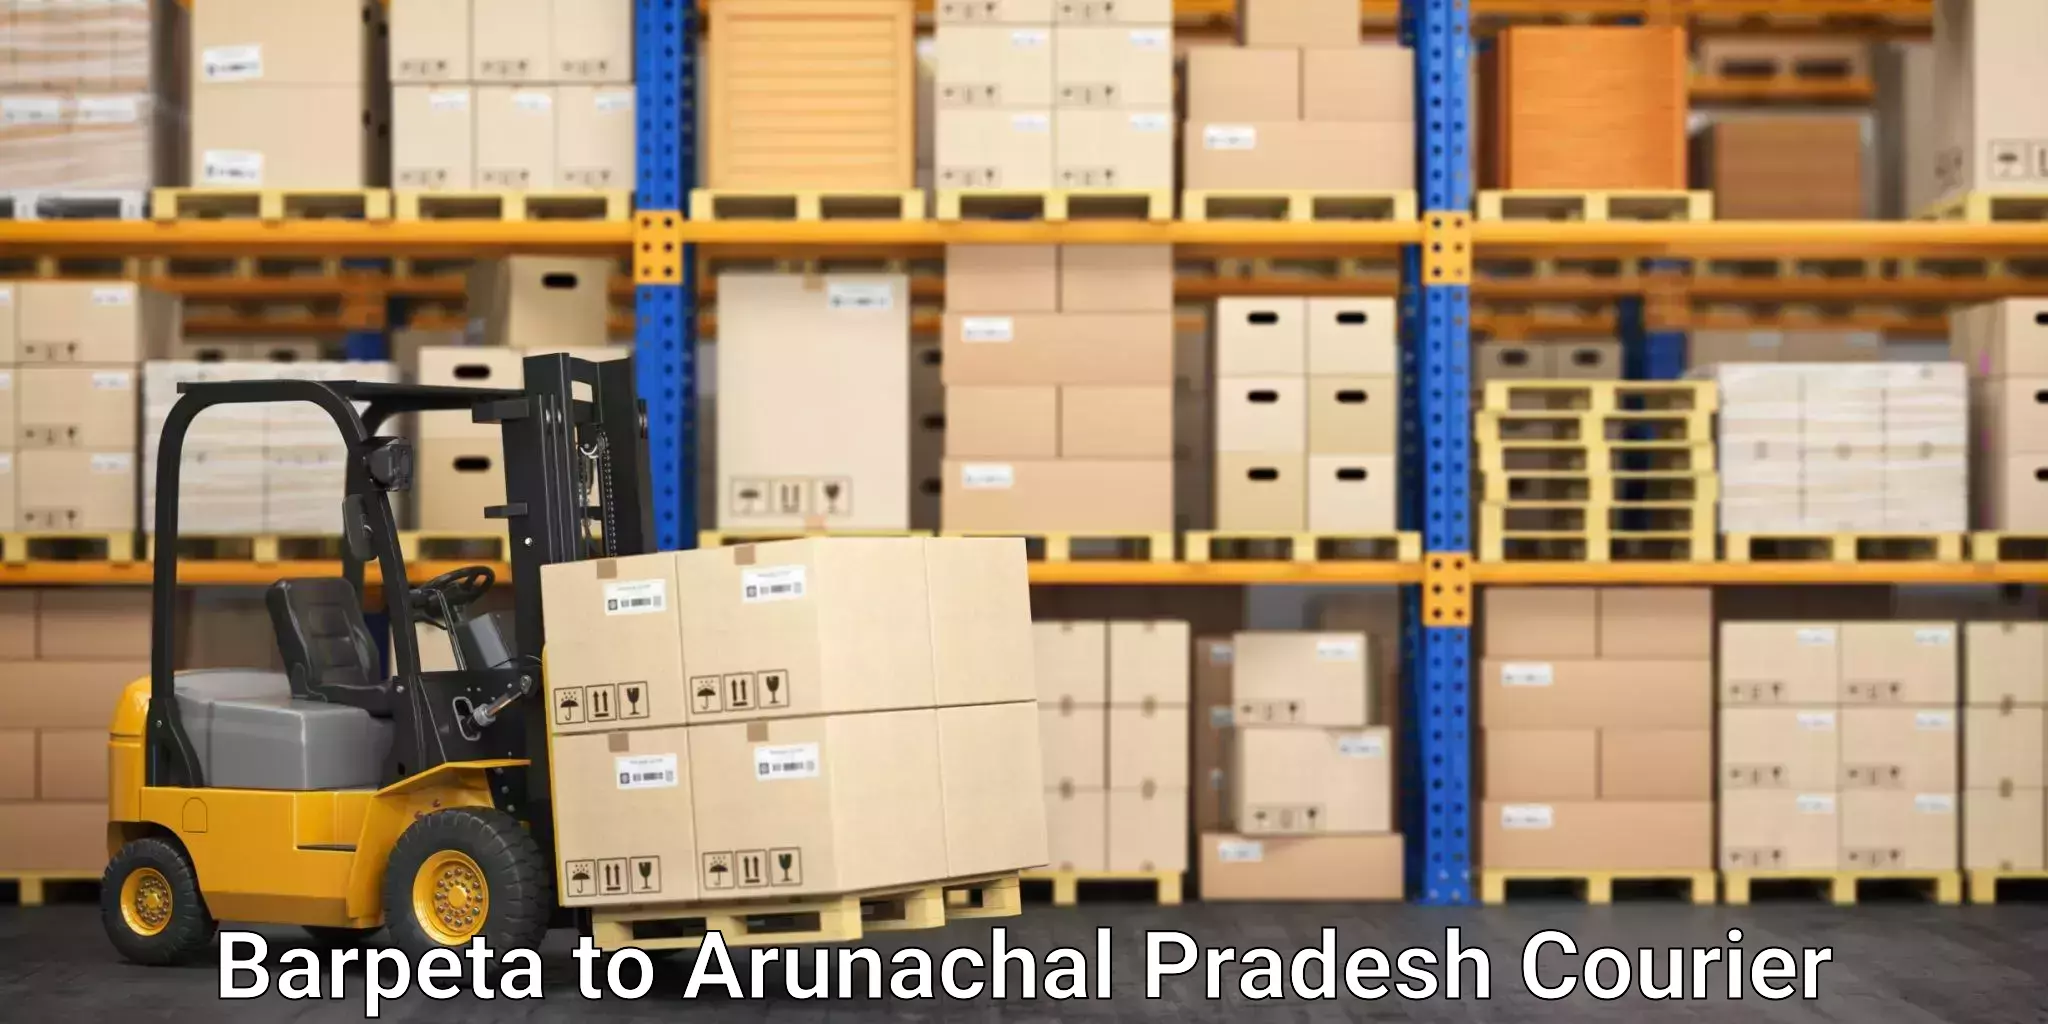 Reliable delivery network Barpeta to Arunachal Pradesh